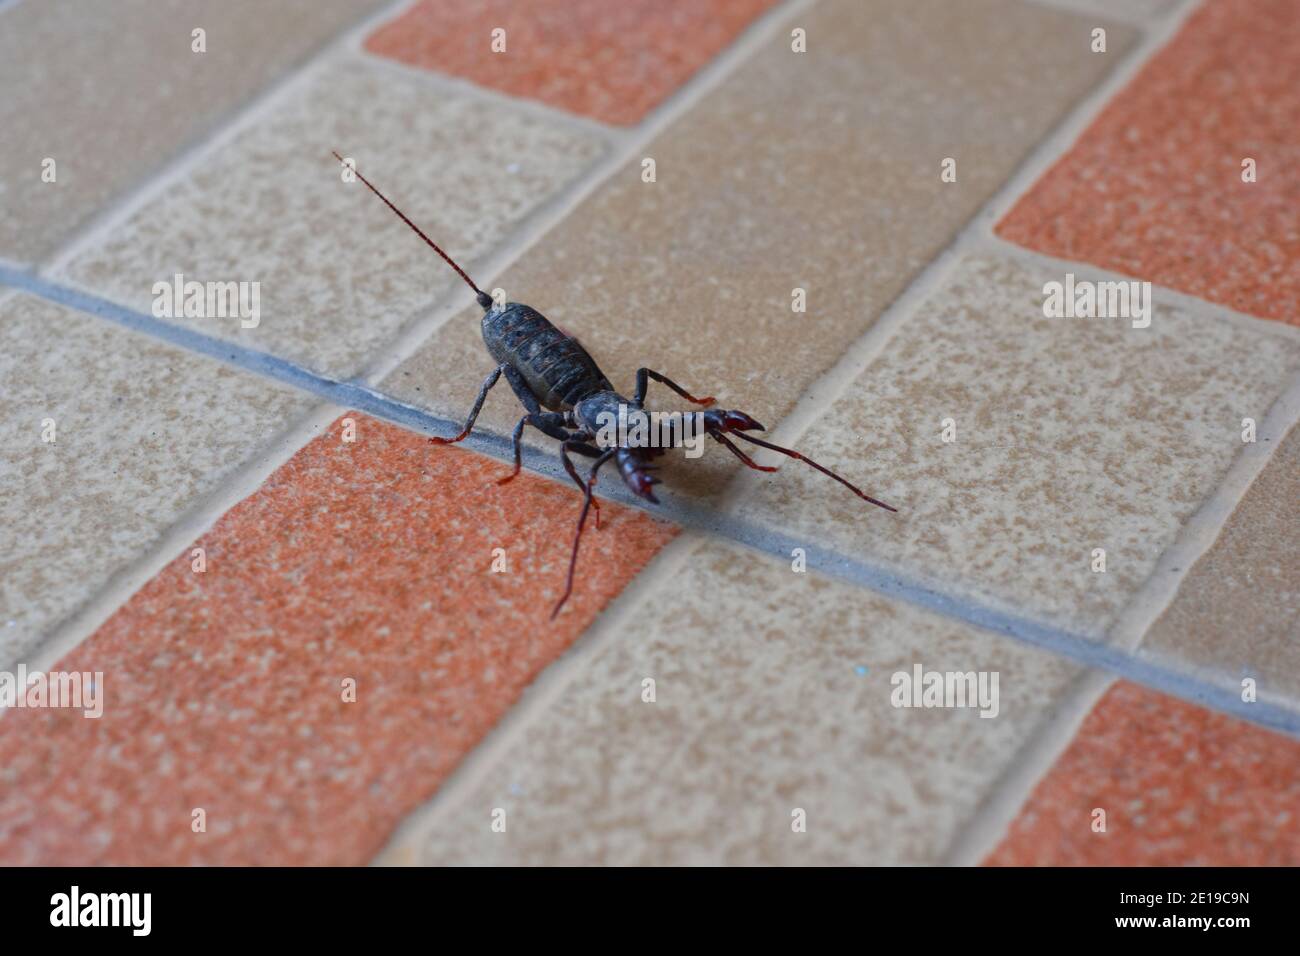 whip scorpion crawling on floor tiles Stock Photo